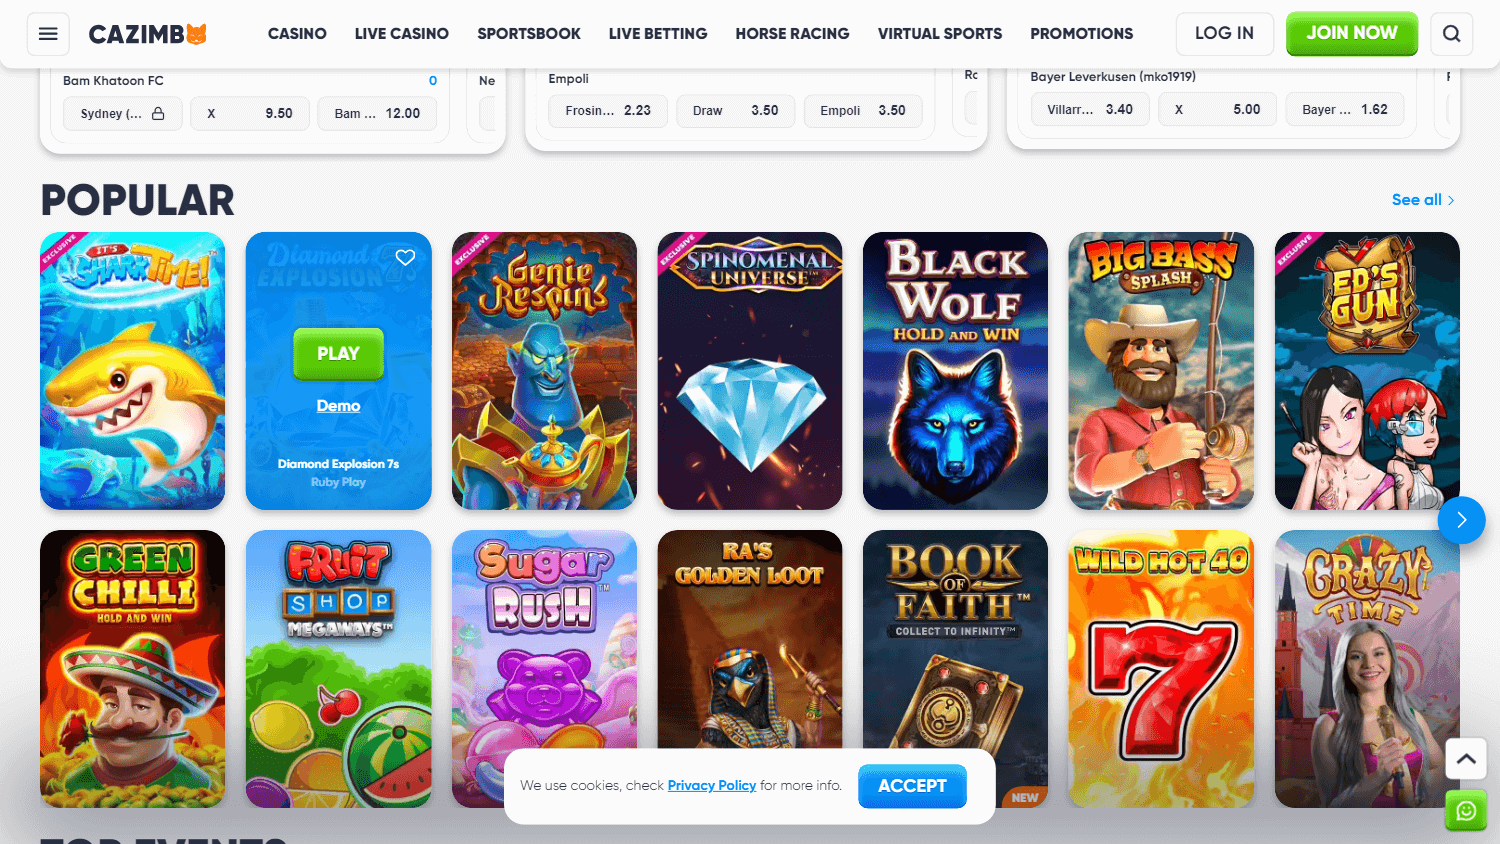 cazimbo_casino_homepage_desktop